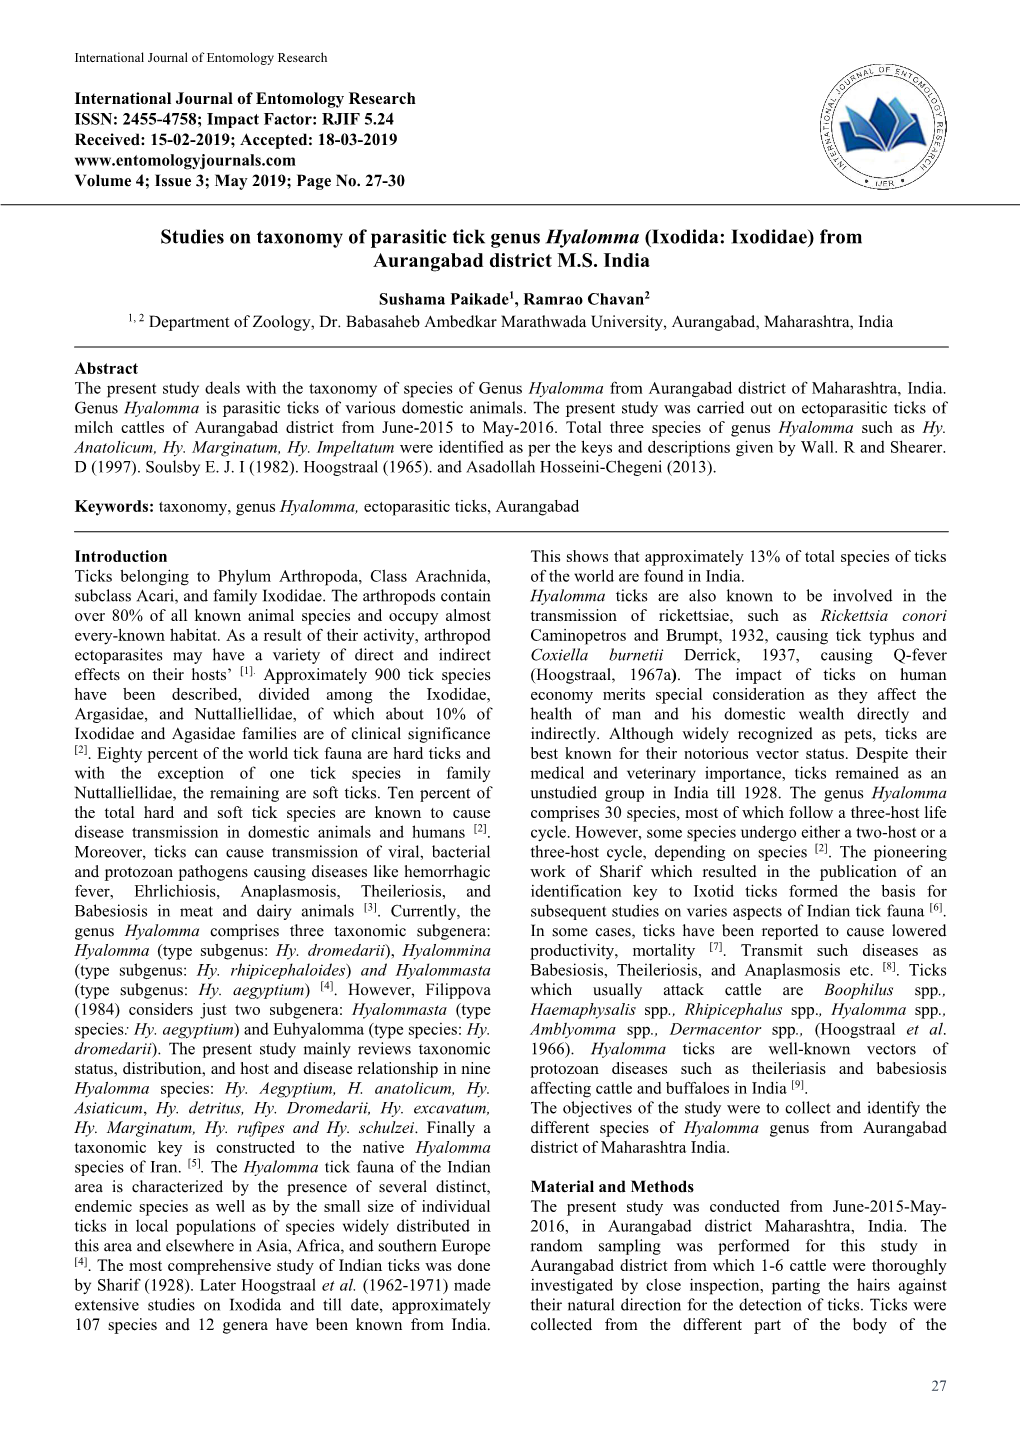 Studies on Taxonomy of Parasitic Tick Genus Hyalomma (Ixodida: Ixodidae) from Aurangabad District M.S